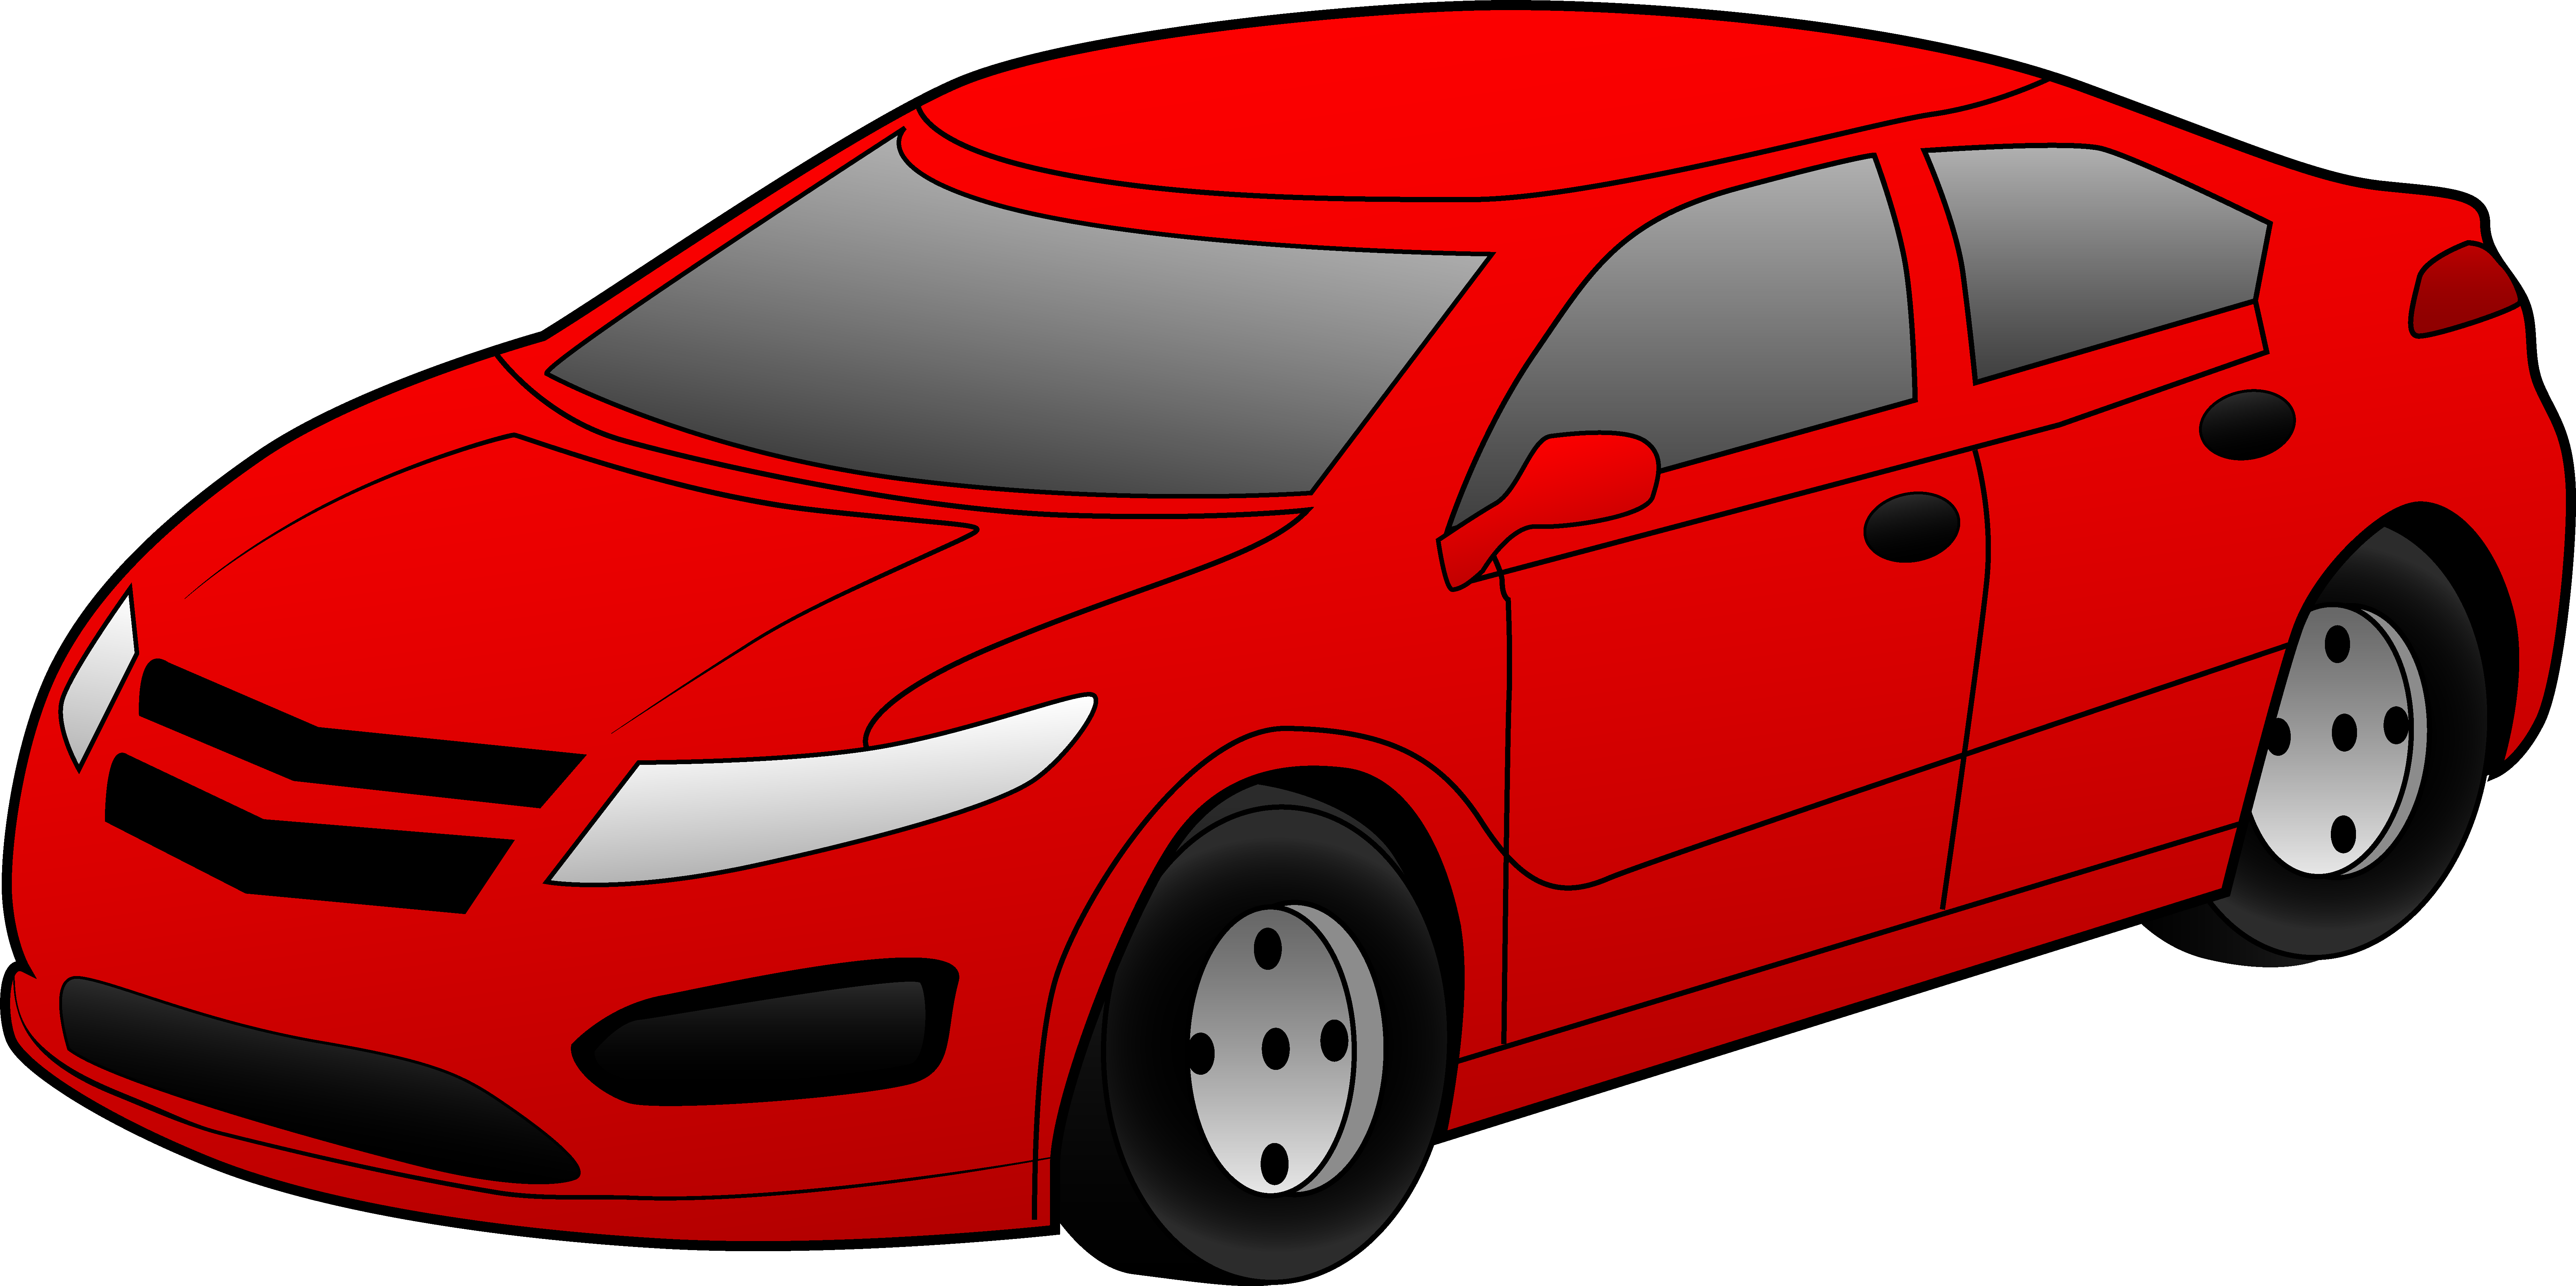 Vehicle clip art - ClipartFox